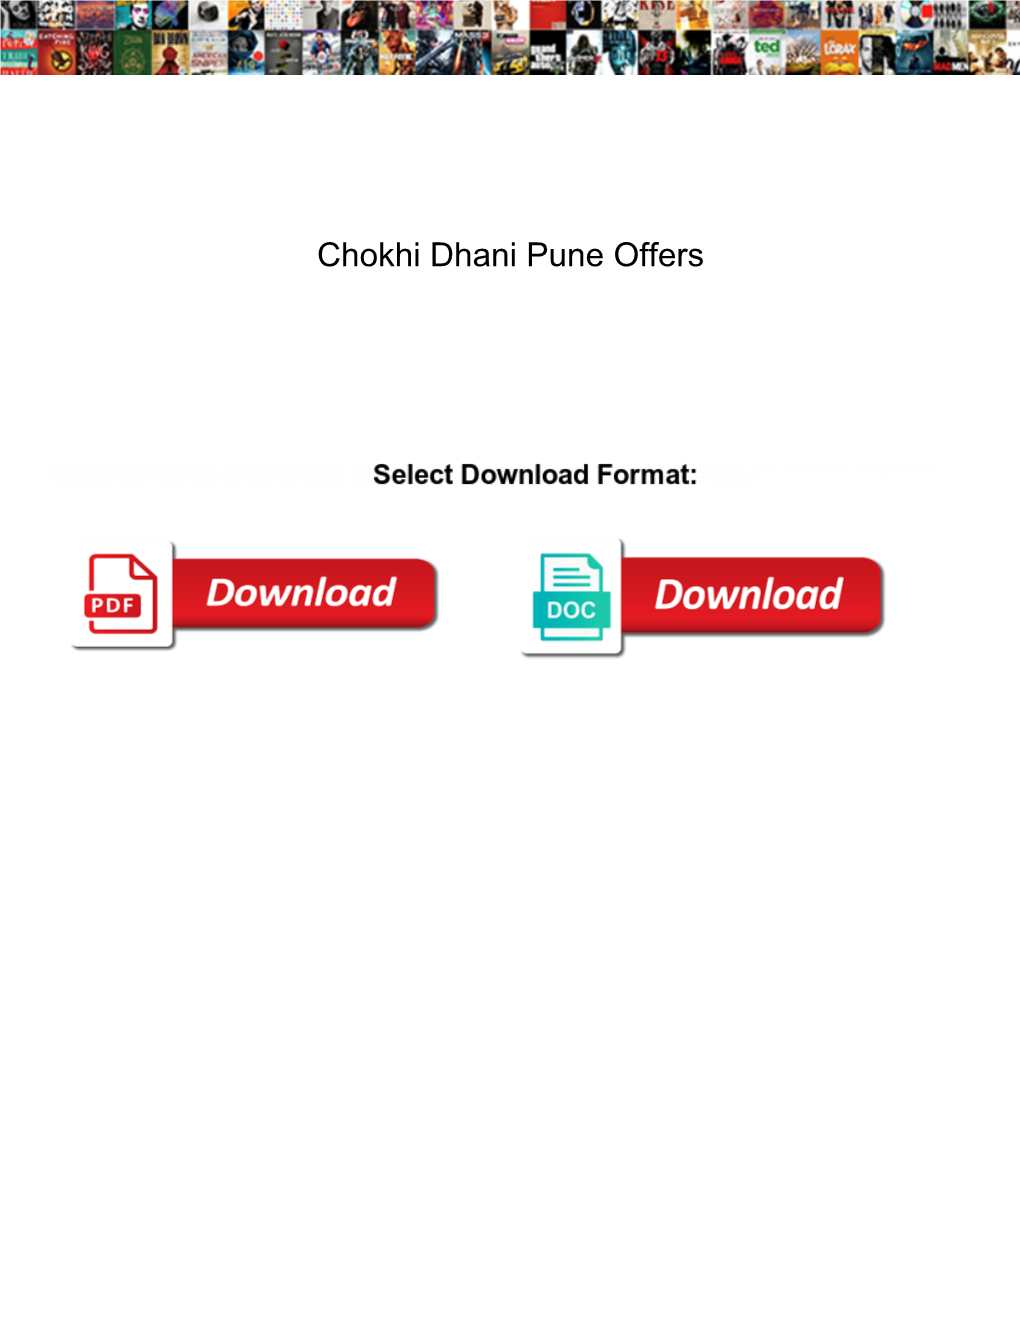 Chokhi Dhani Pune Offers